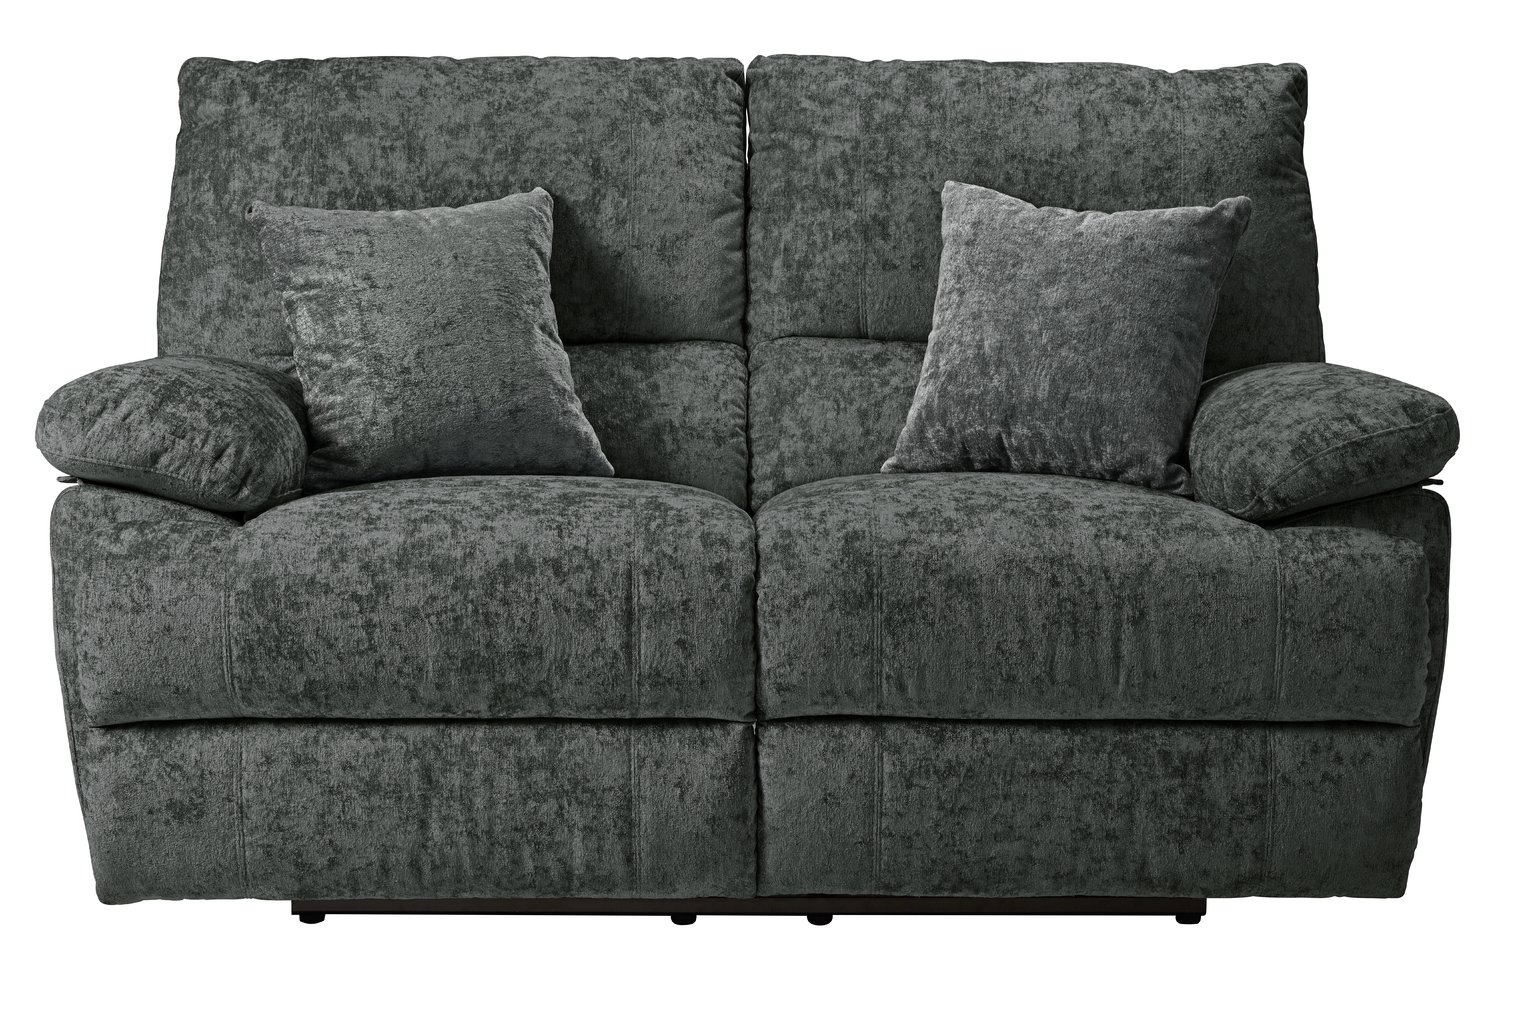 Argos Home Carmilla 2 Seater Fabric Recliner Sofa - Charcoal